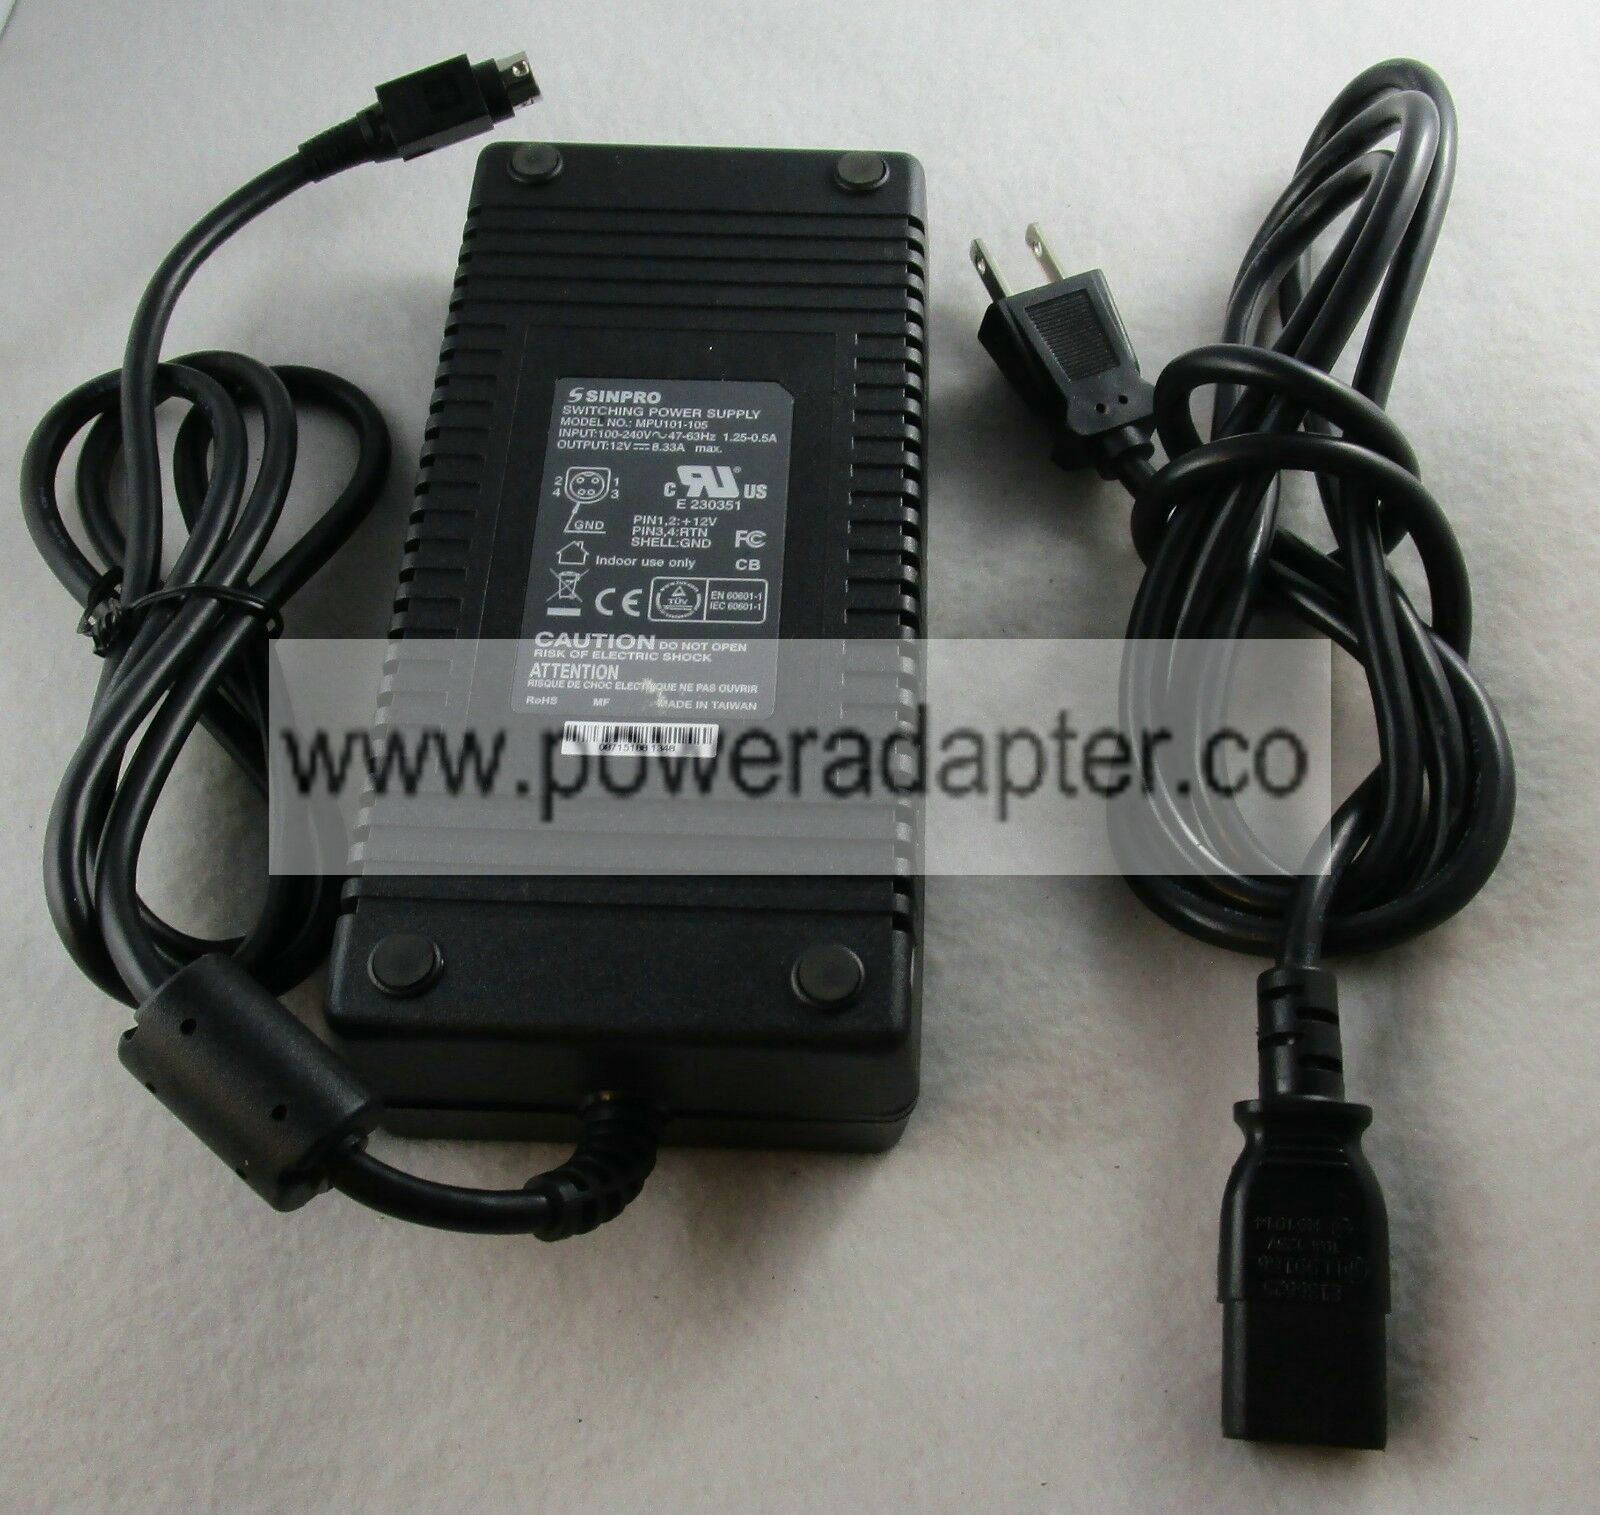 Sinpro 12v 100w Medical Power AC Adapter MPU101-105 - Click Image to Close